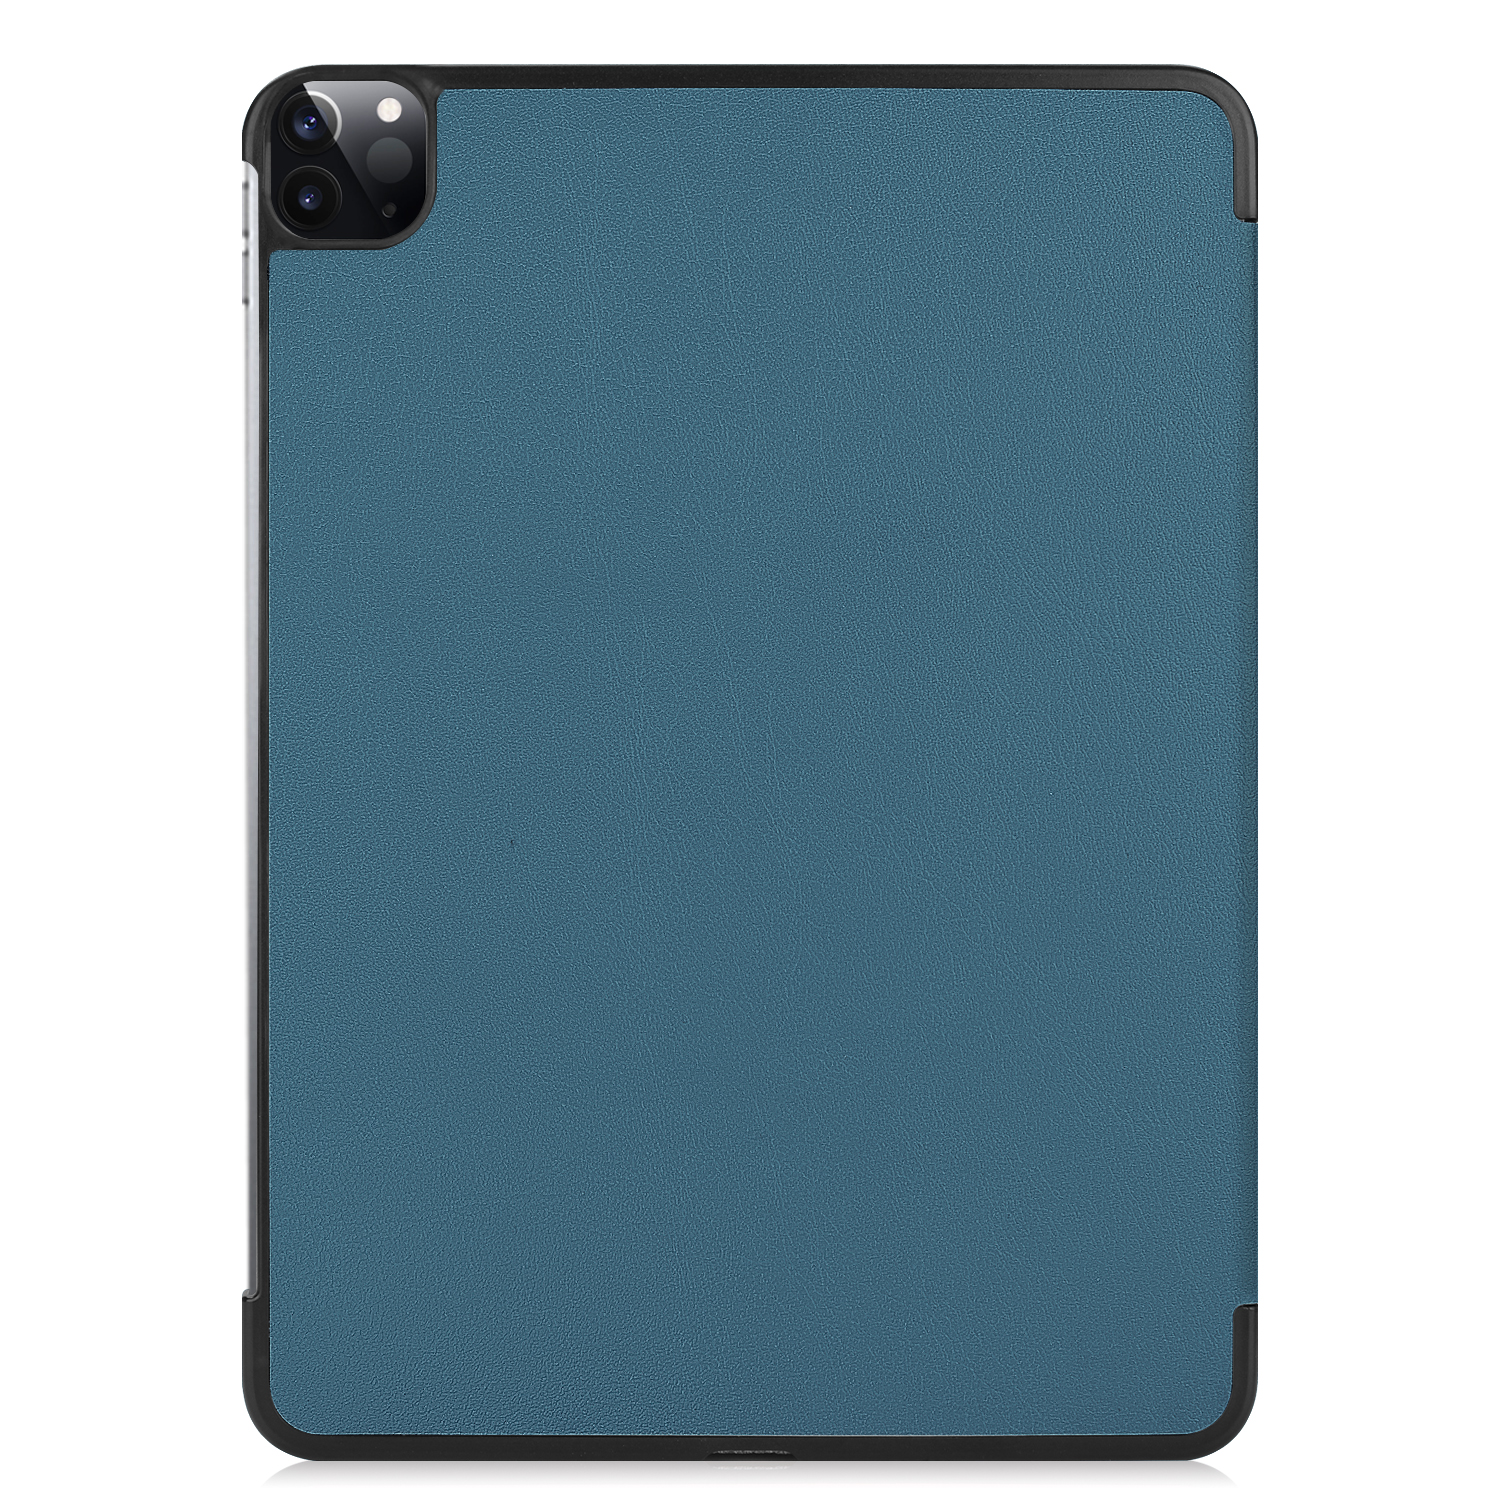 LOBWERK Hülle 2021 Apple Bookcover Grün Kunstleder, Schutzhülle iPad 12.9 12.9 für Pro 5. Zoll Generation